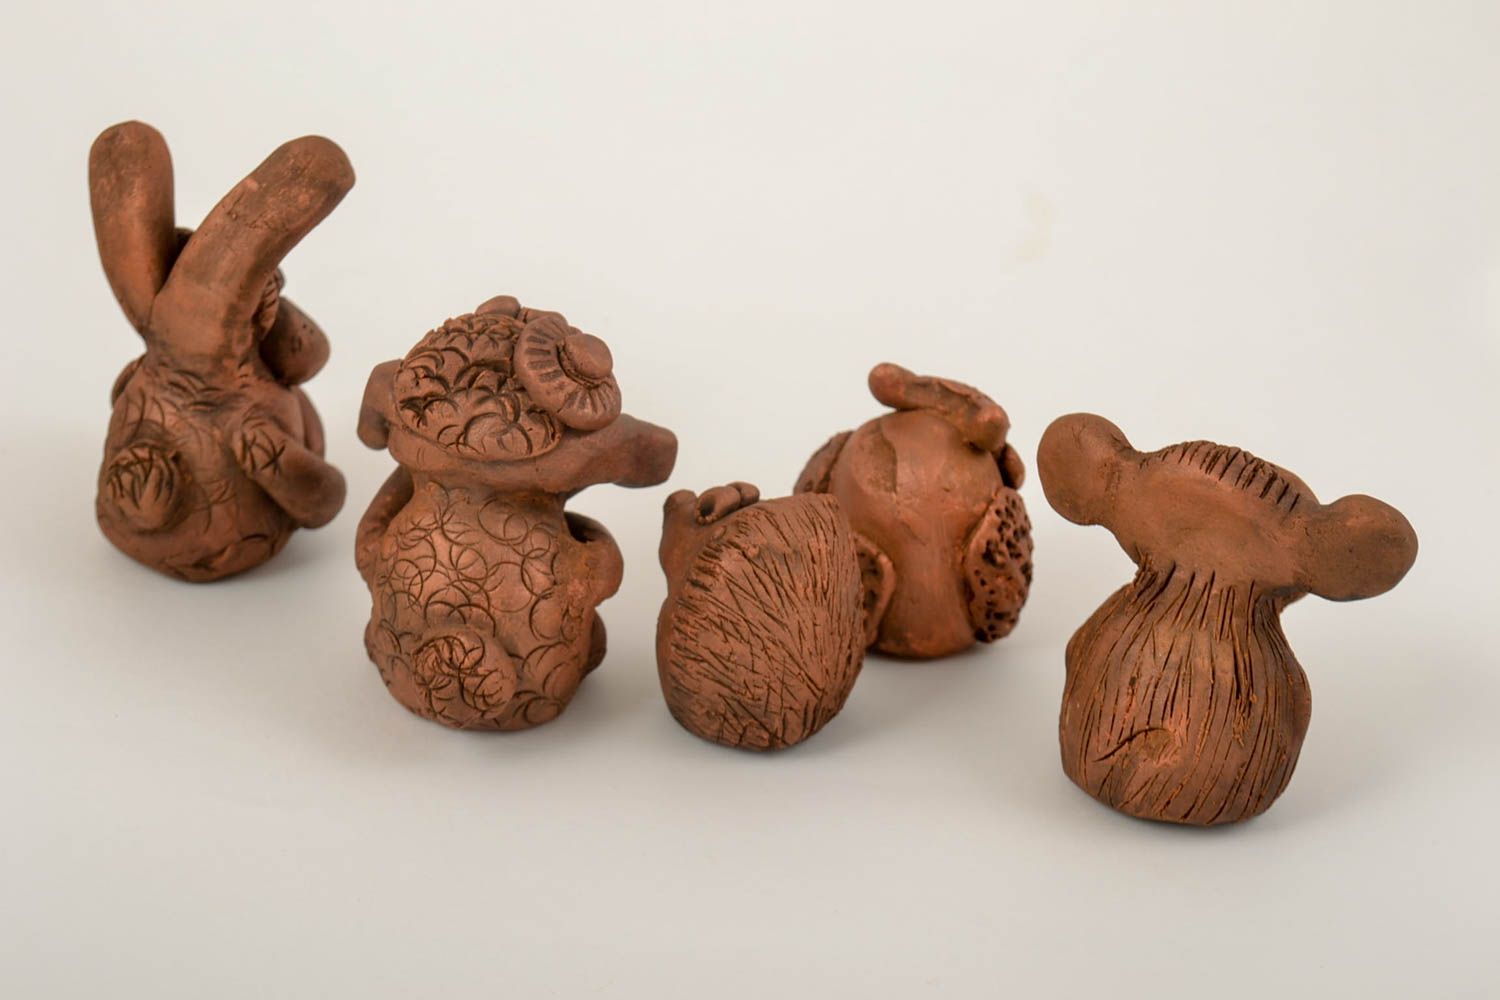 Handmade animal figurines ceramic figurines home decor collectible figurines photo 4